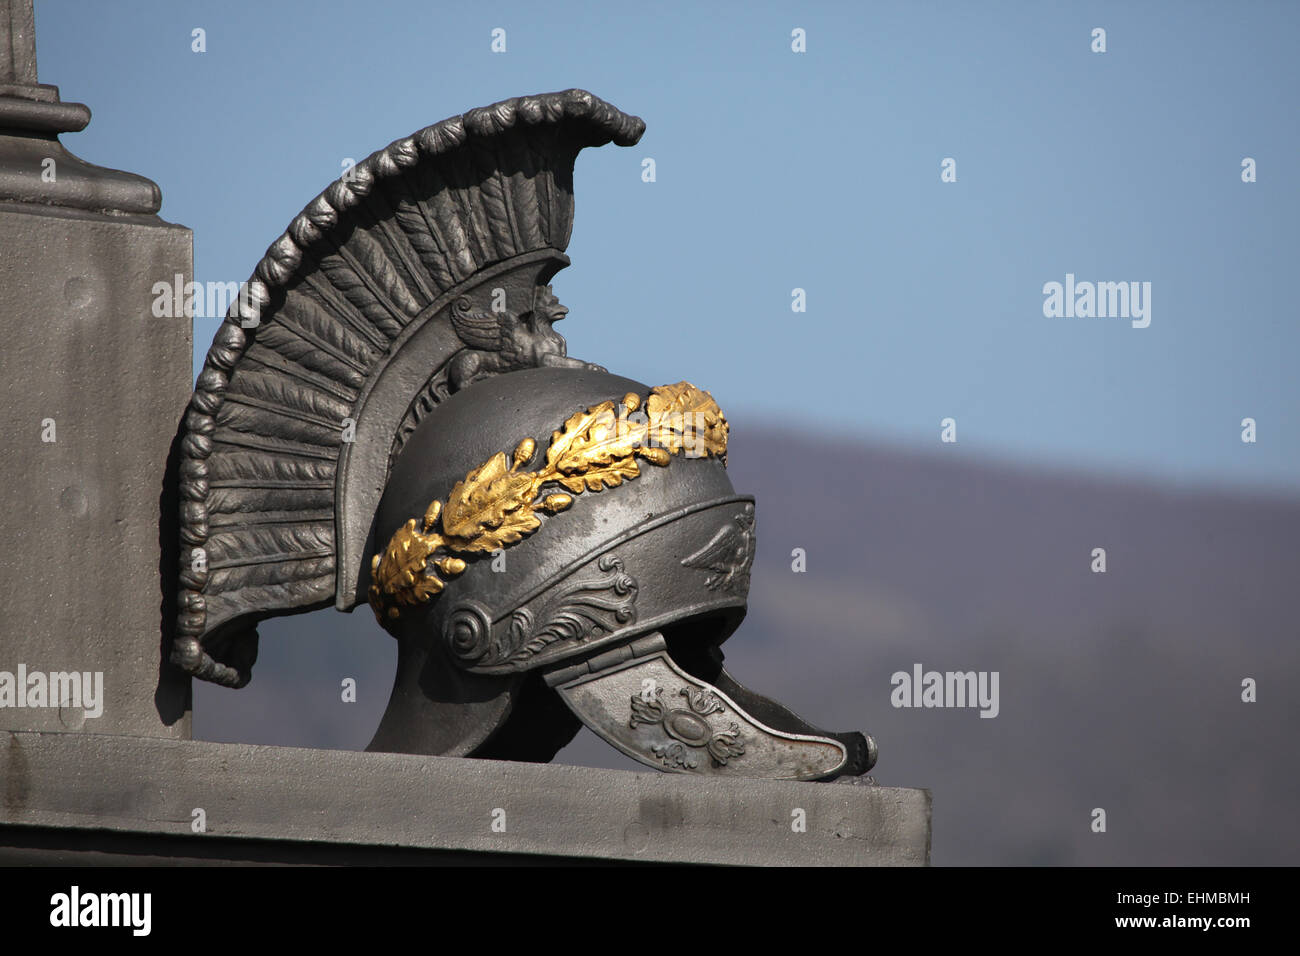 Ancient Roman helmet. Memorial to Russian soldiers fallen in the Battle of Kulm (1813) in North Bohemia, Czech Republic. Stock Photo